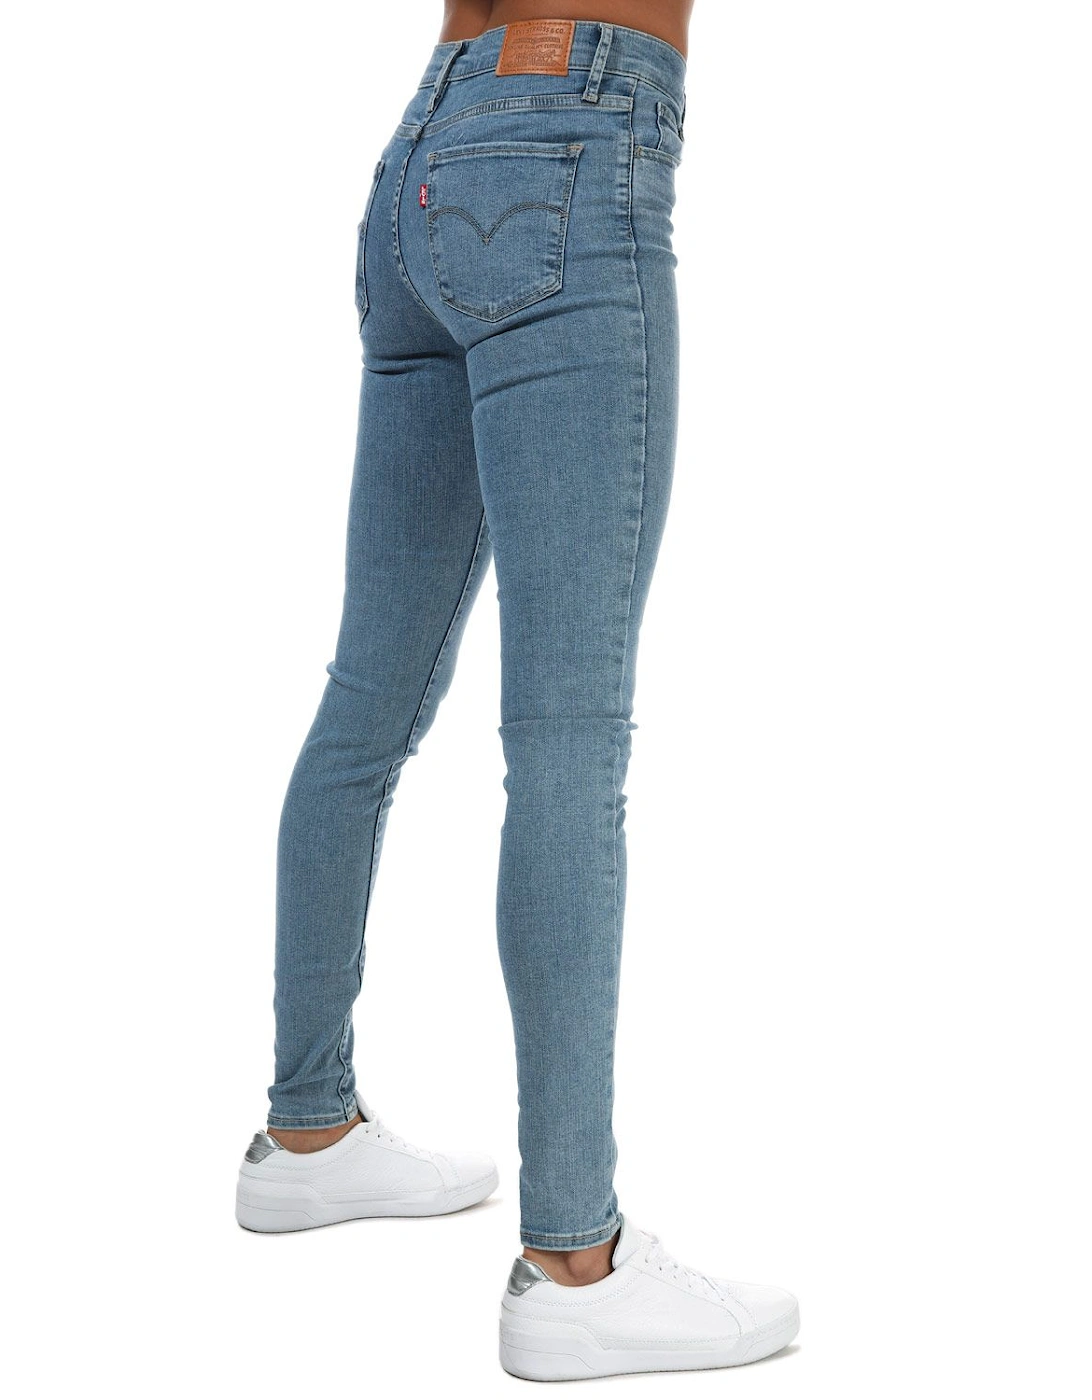 Womens 720 High Rise Super Skinny Jeans